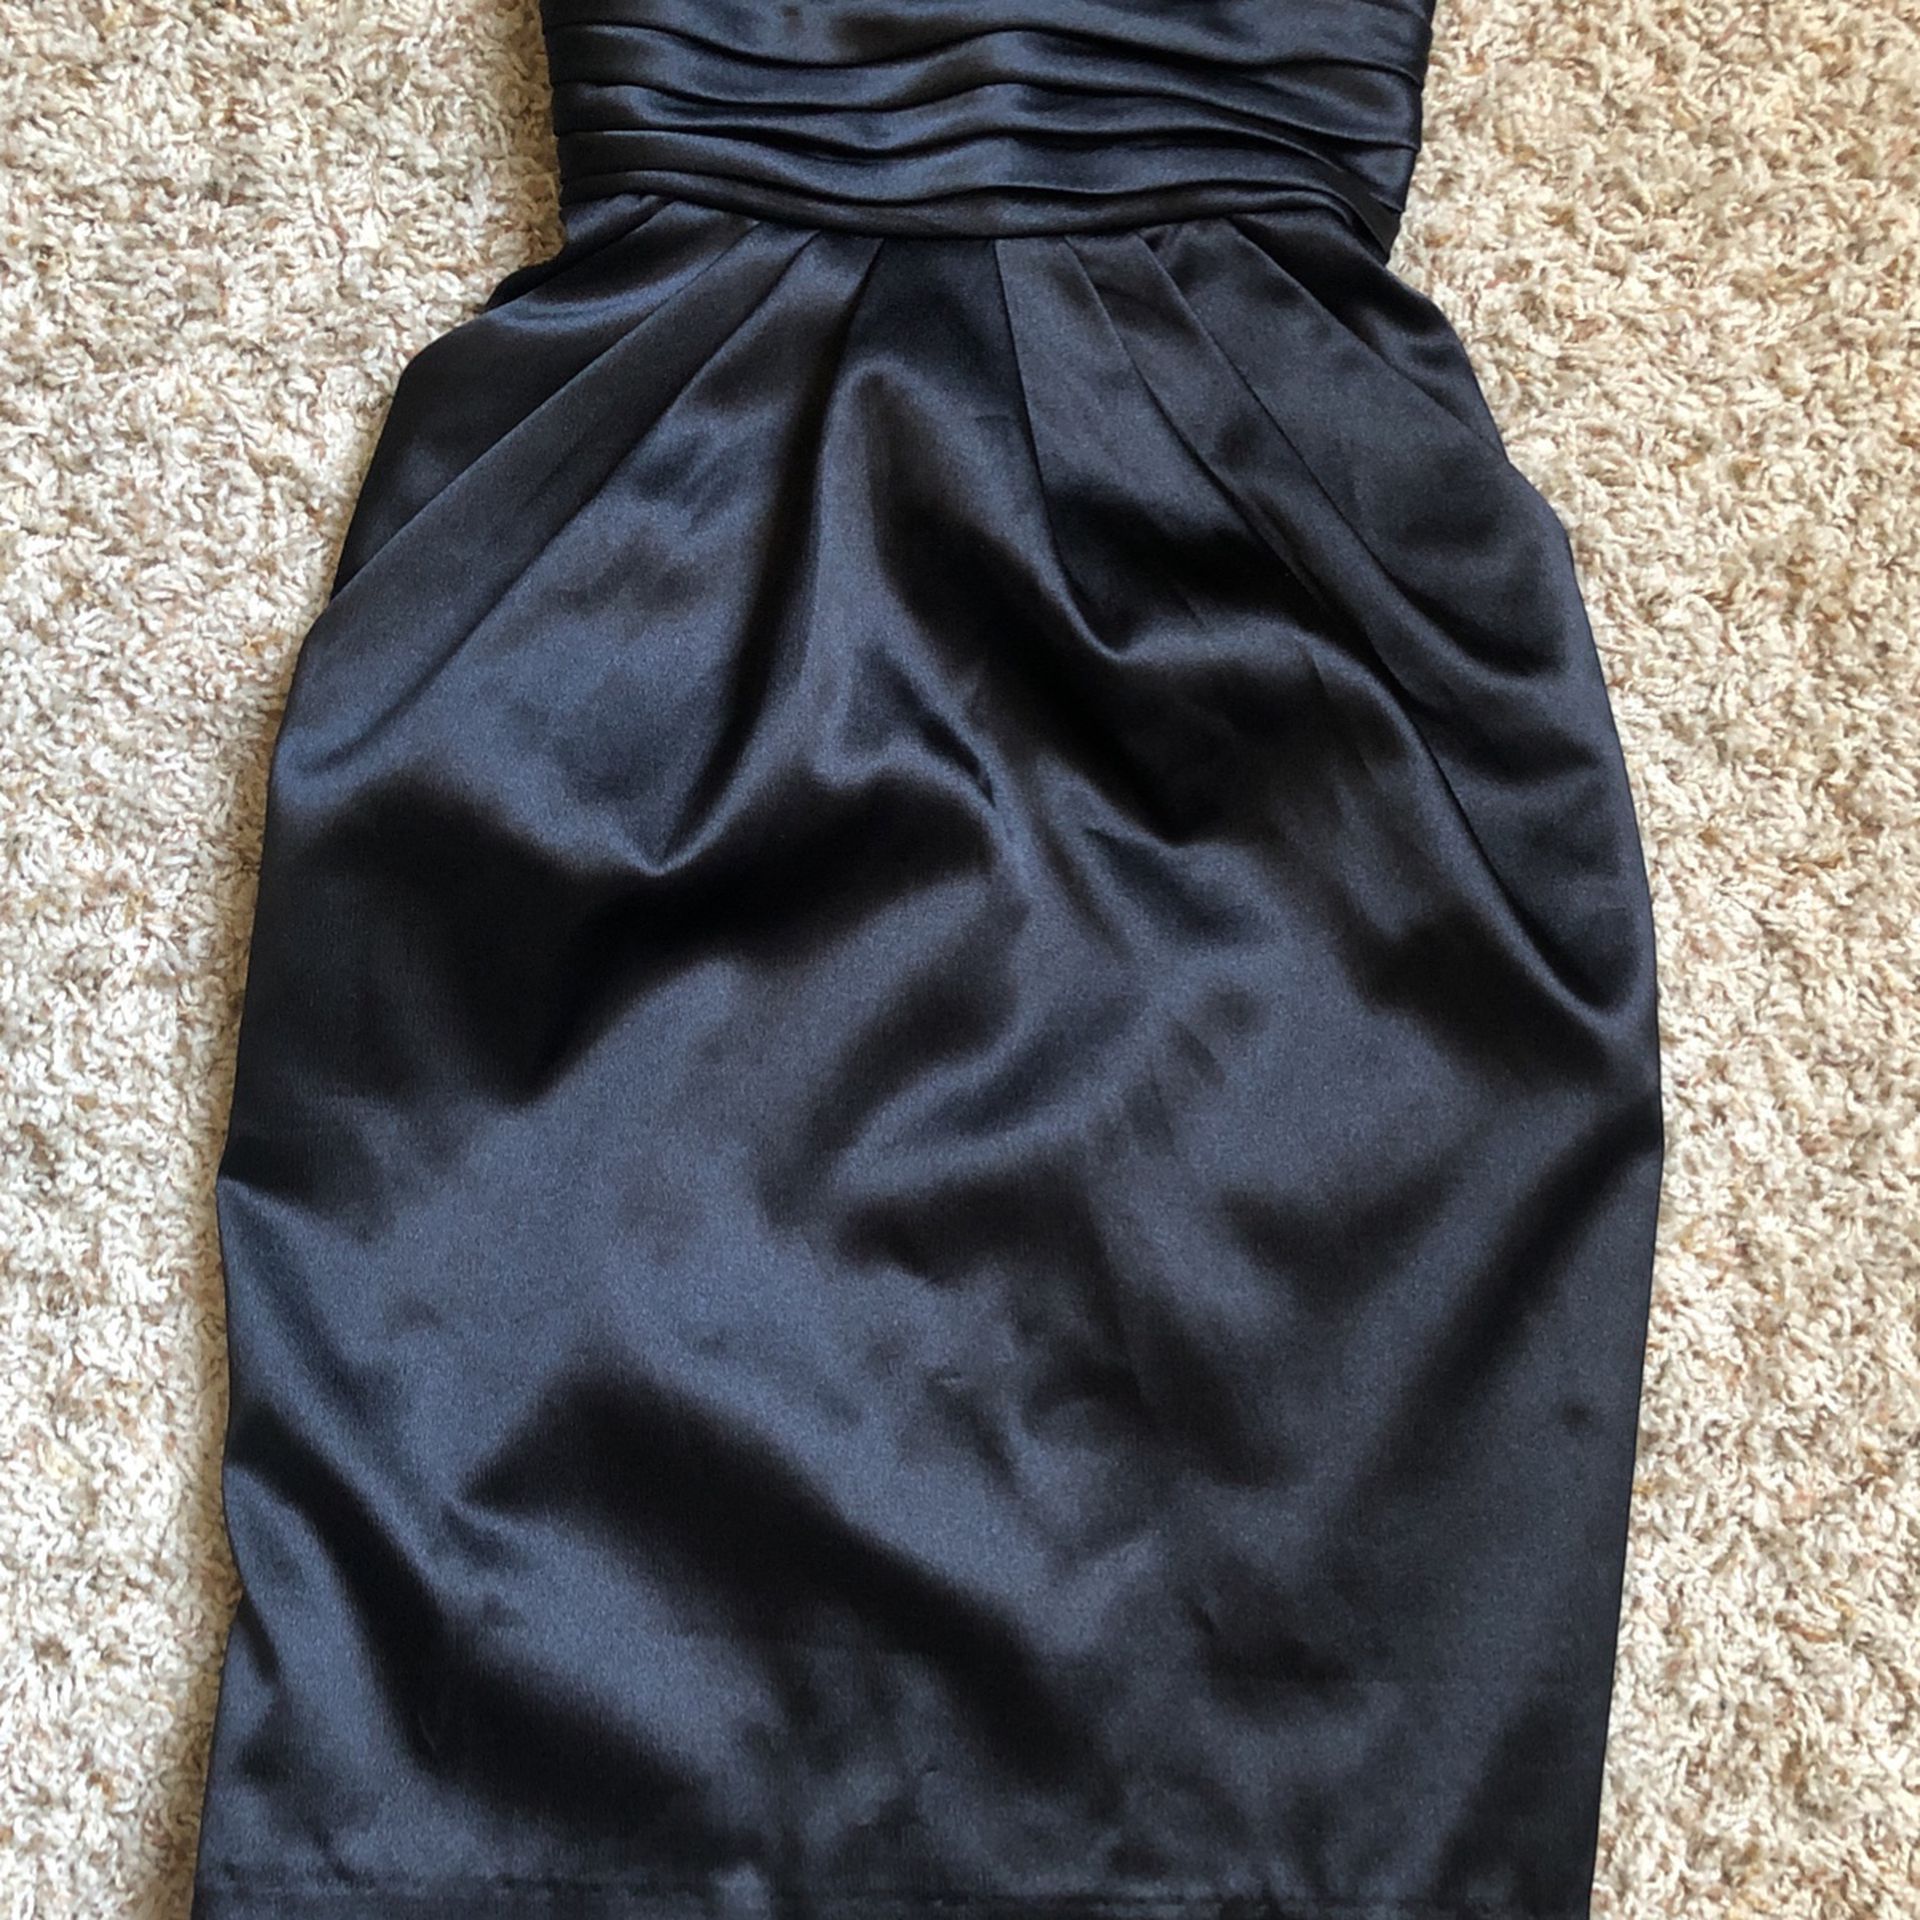 Black Dress Size